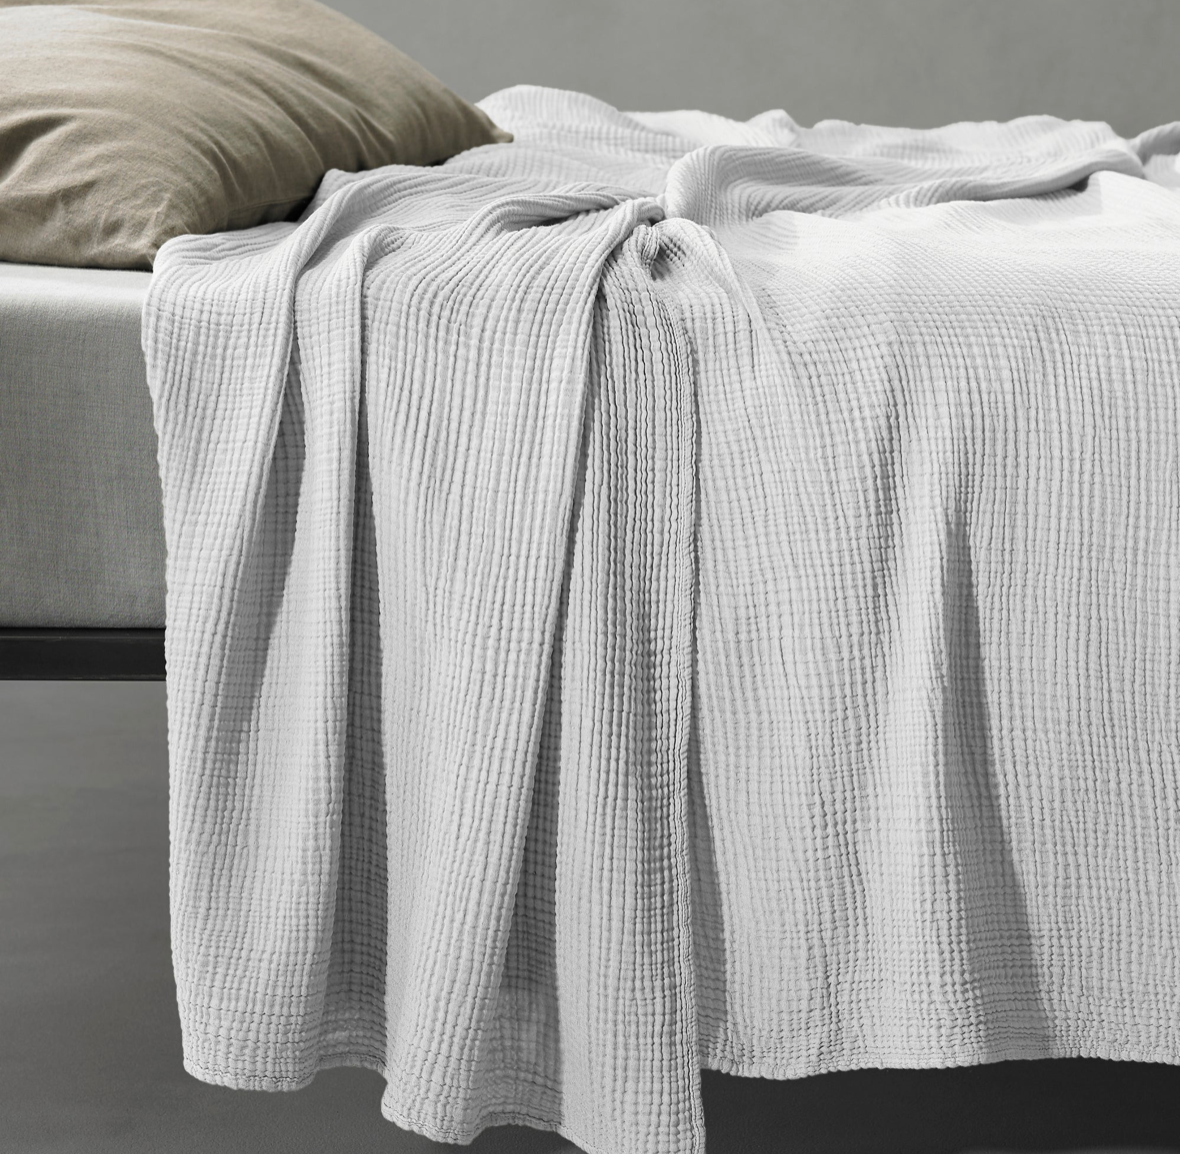 Gray Cotton Voile Bedspread